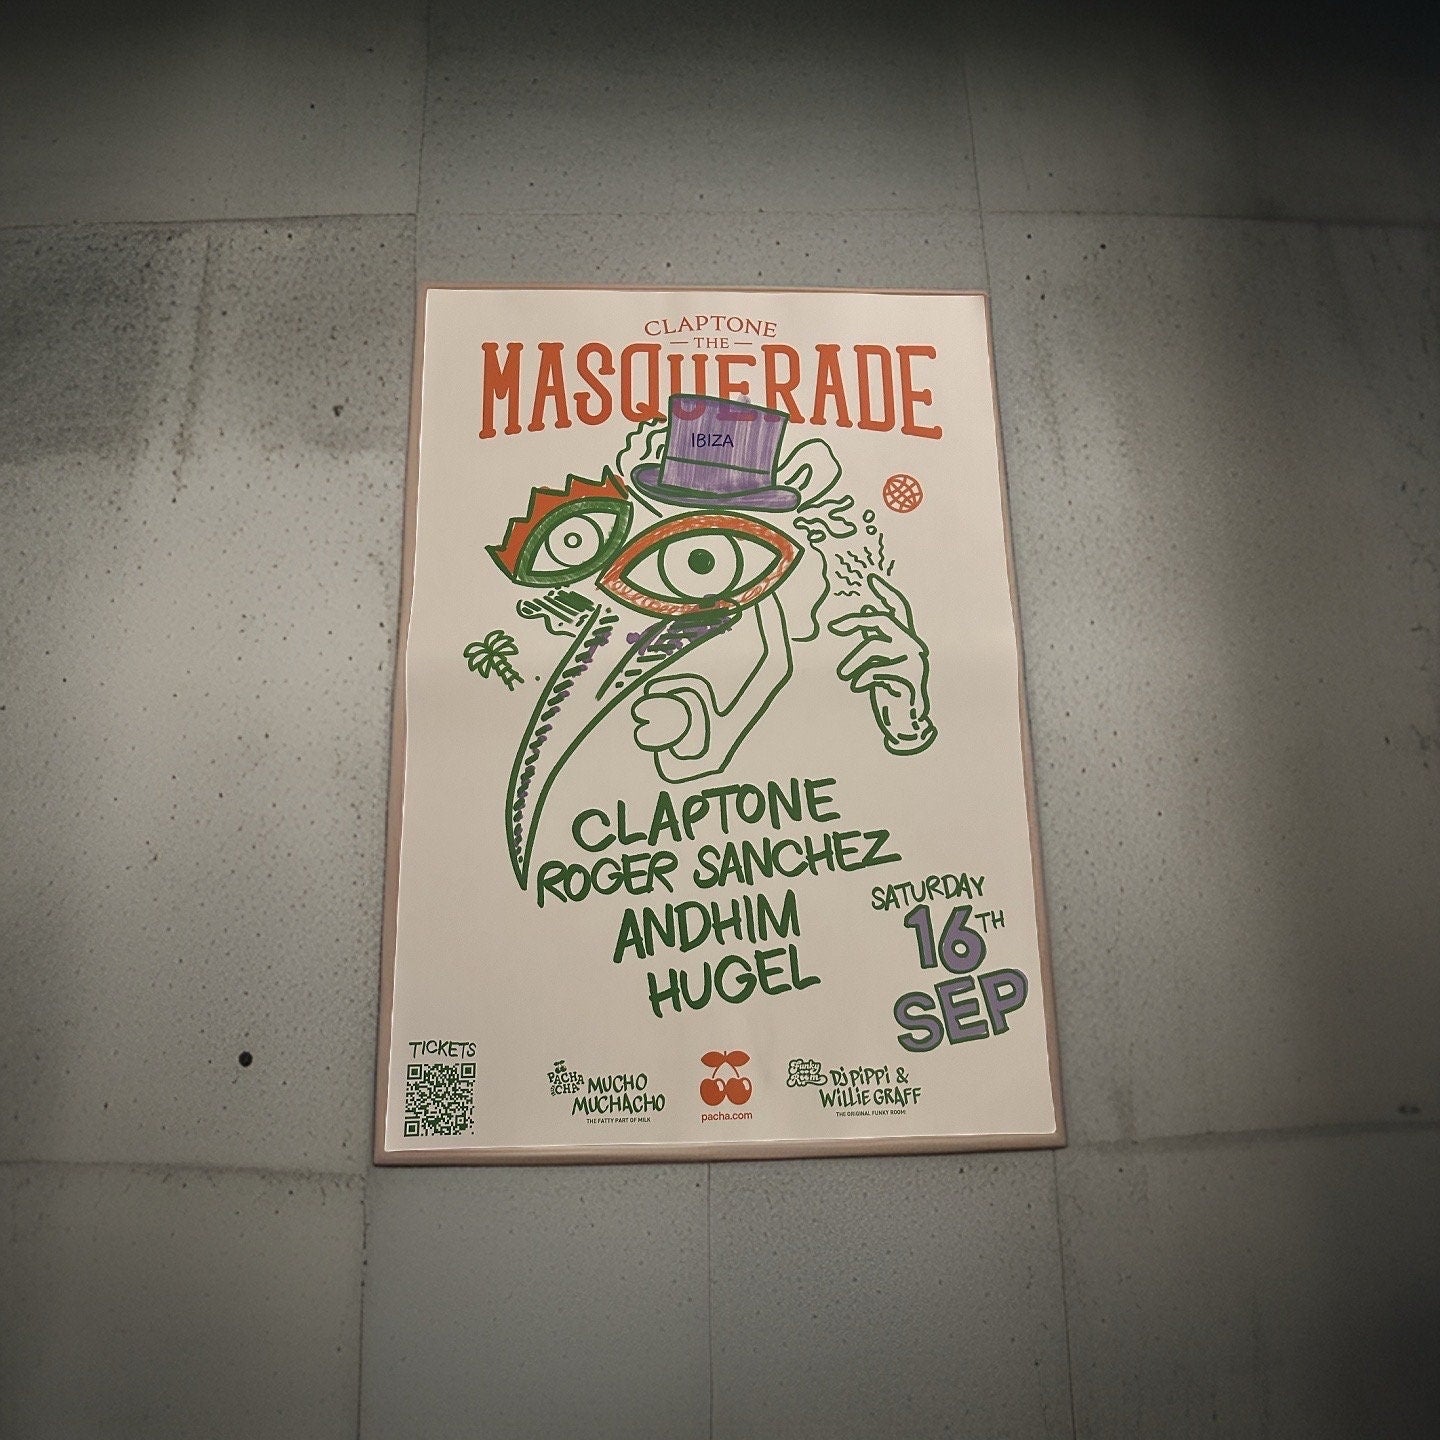 Masquerade ~ Genuine Official Pacha Ibiza Framed Dj Artwork Travel Poster | A3 Luxury Black Frame